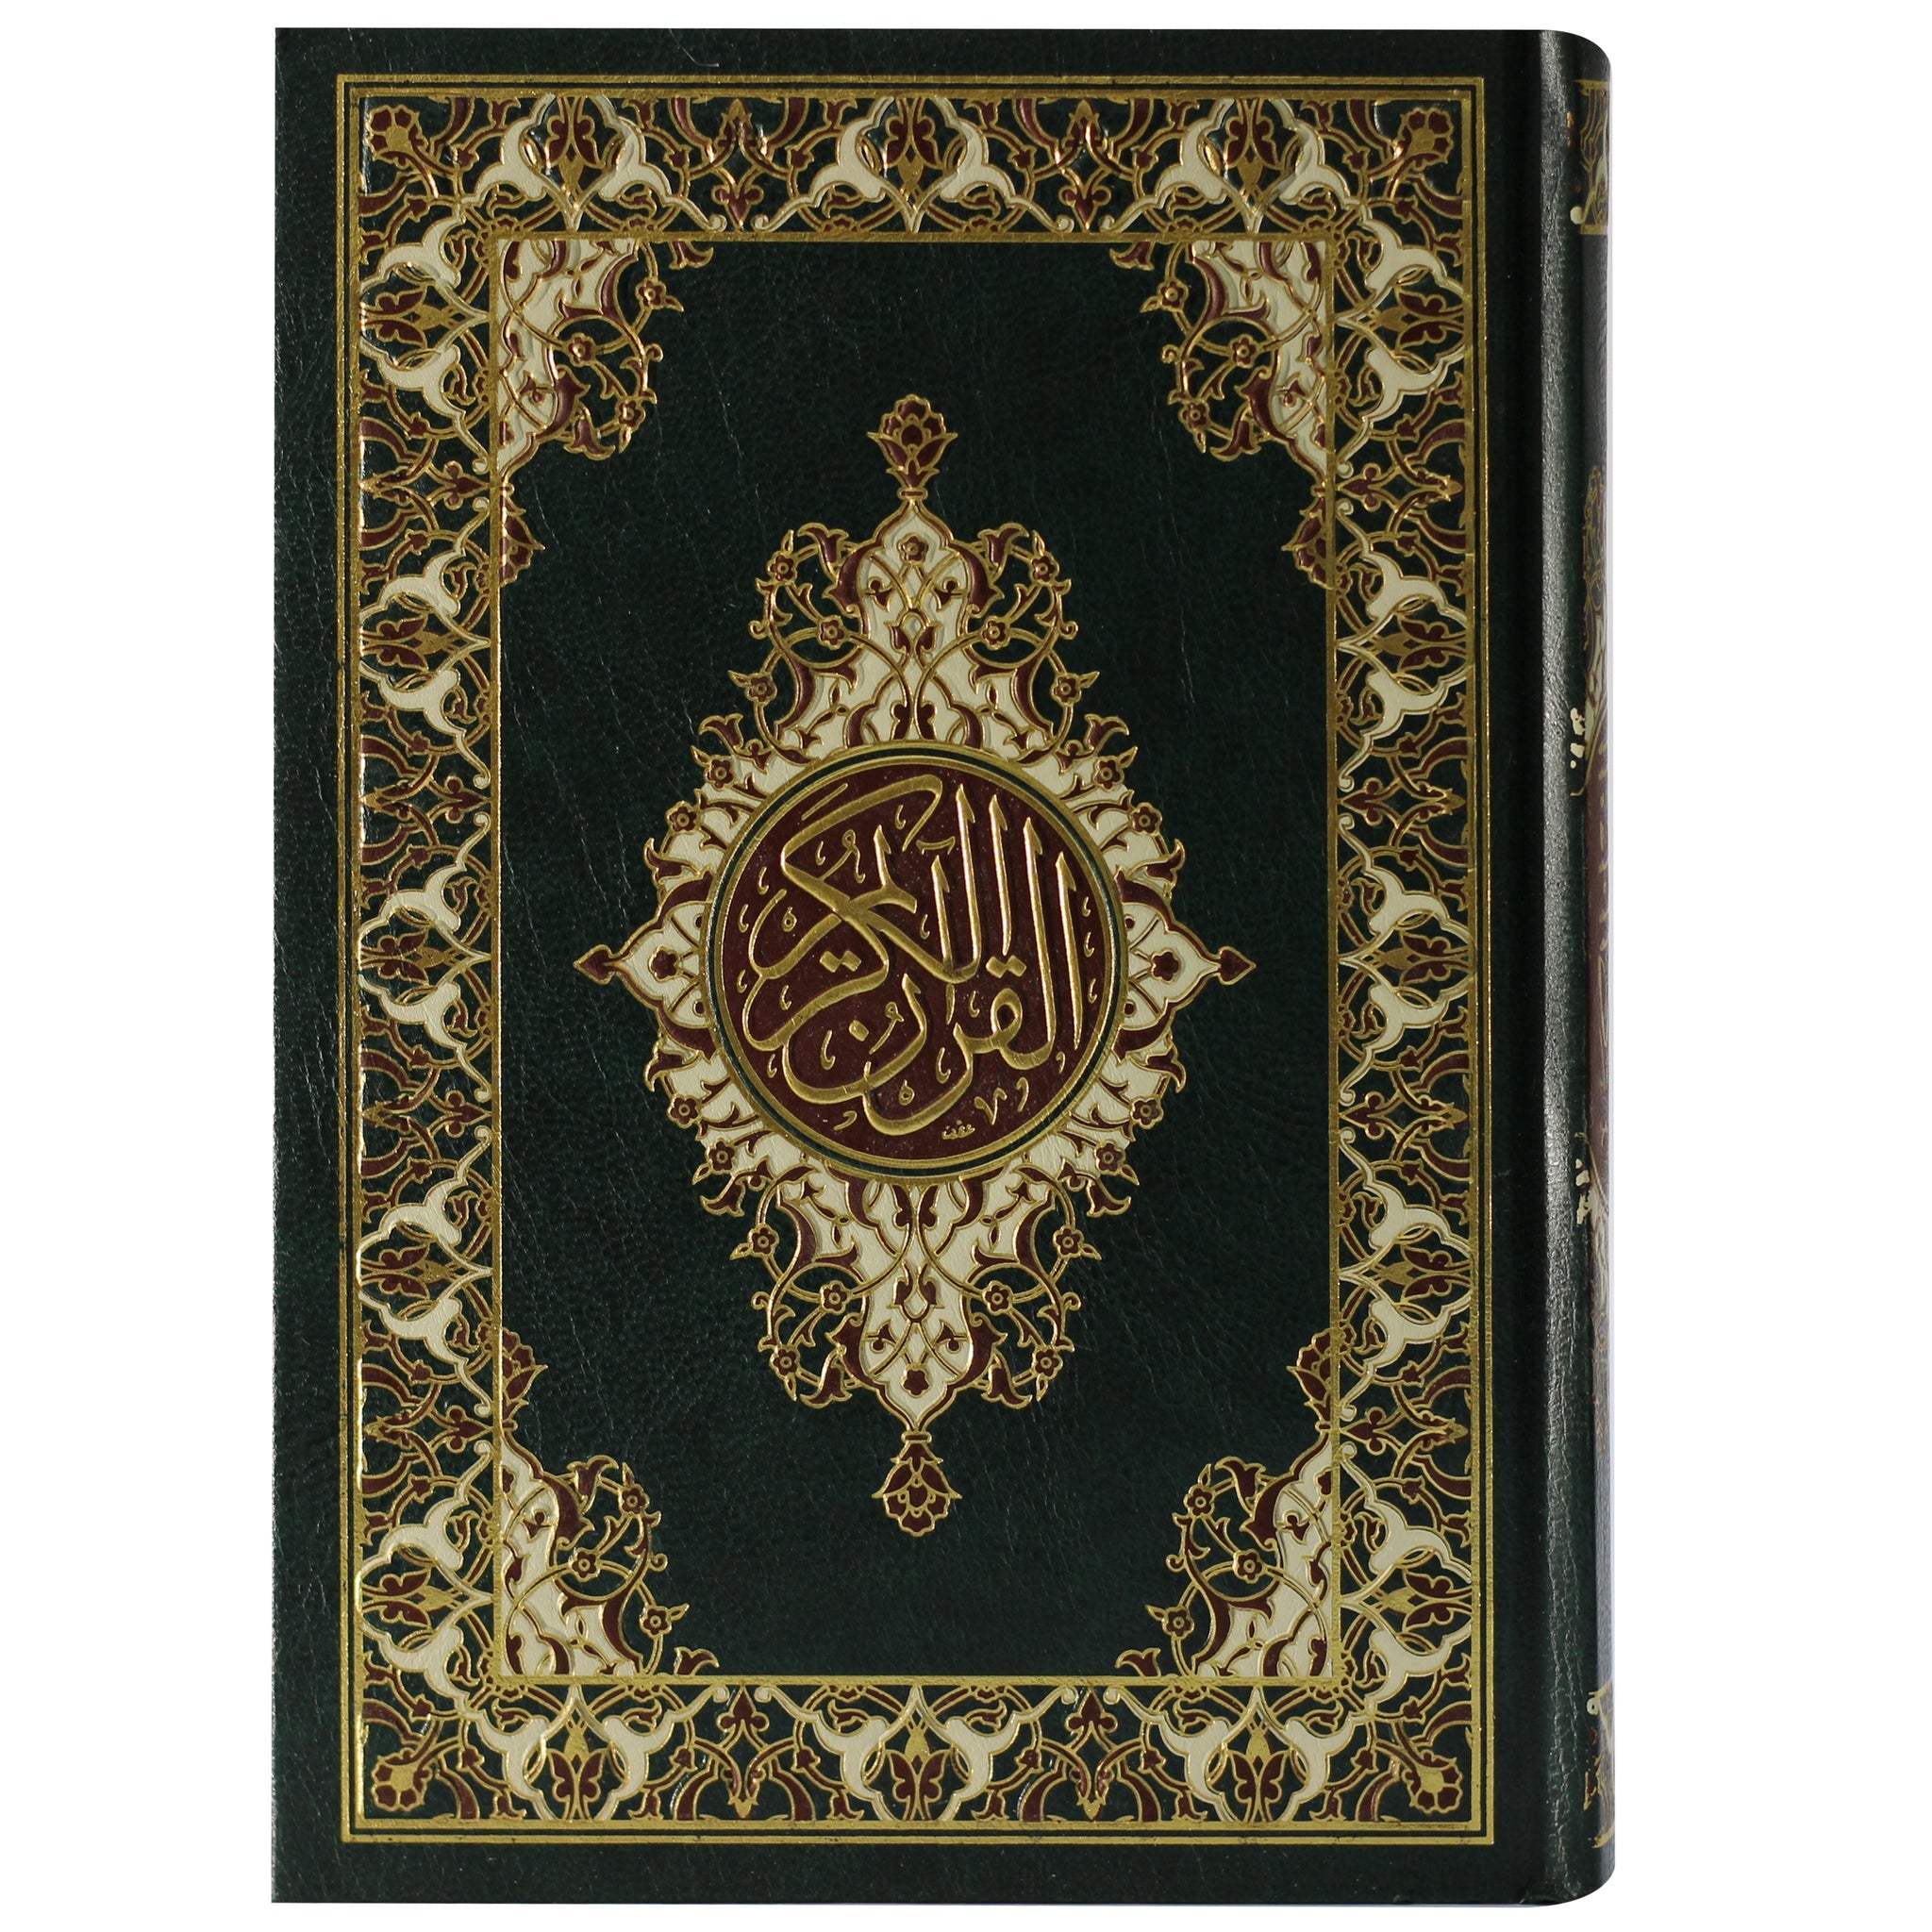 Quran Uthmani Script 14 x 20 cm - Black with Golden Edges